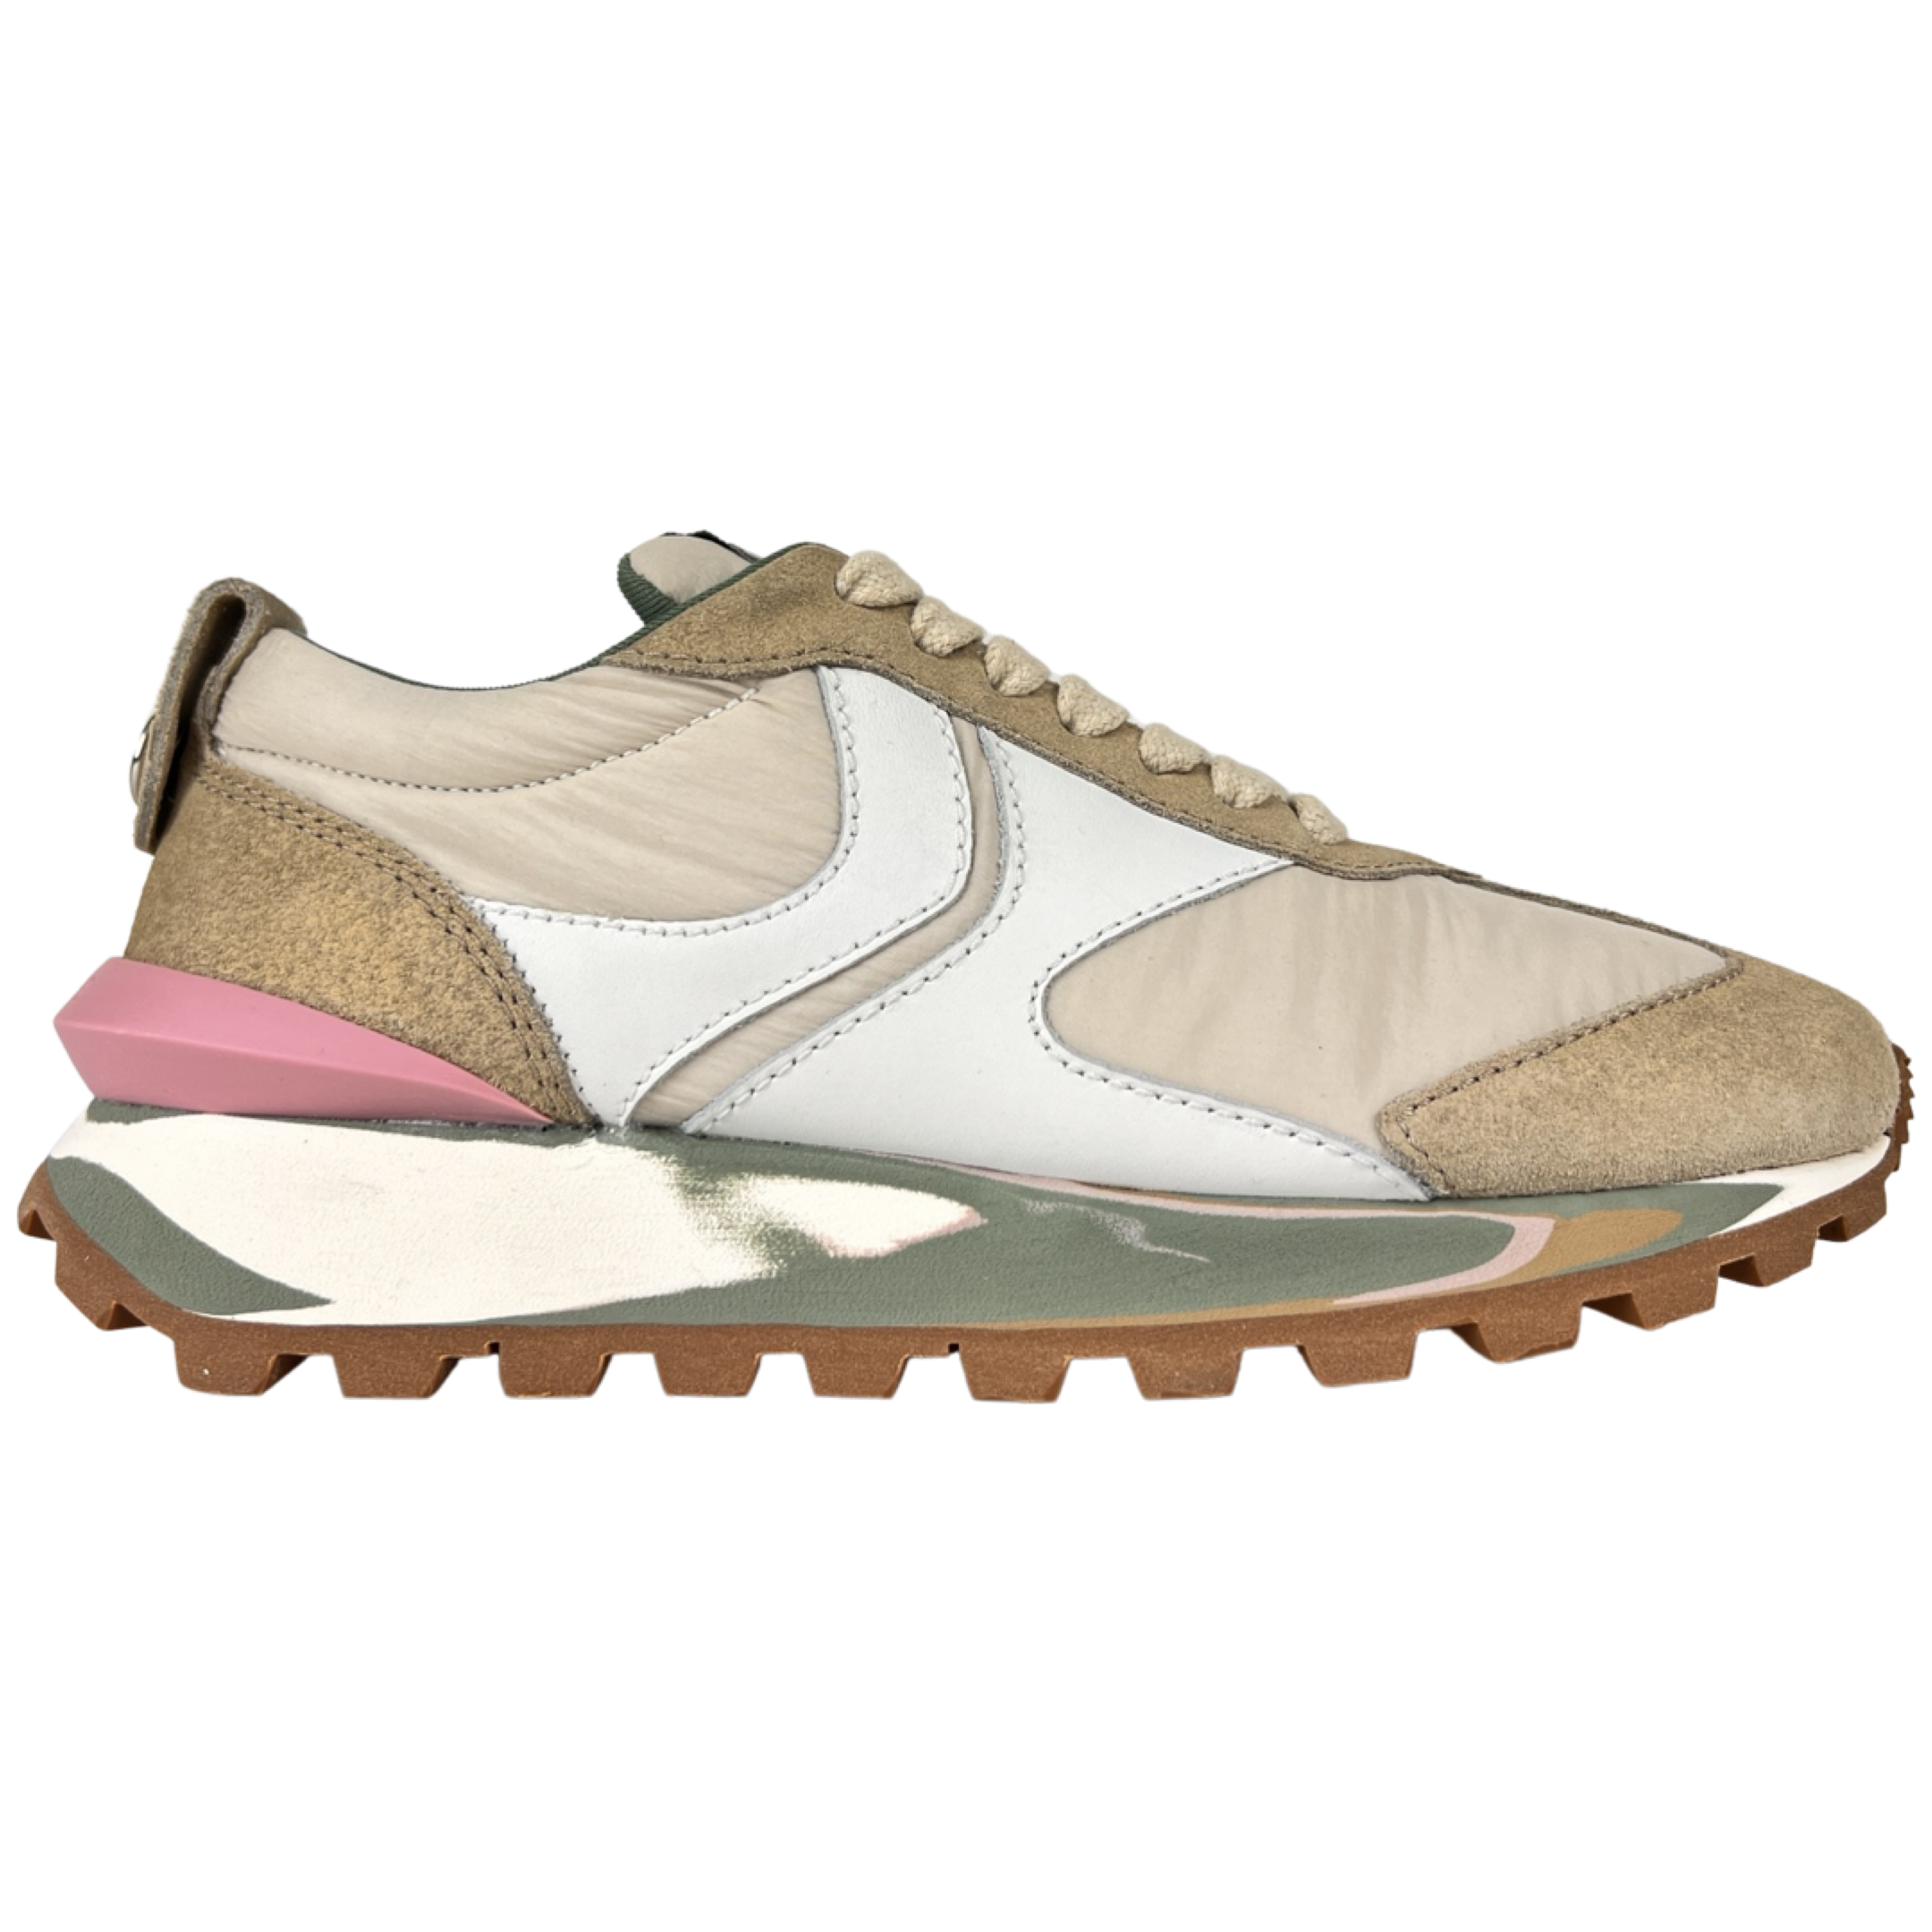 Voile Blanche Sneaker (01603)